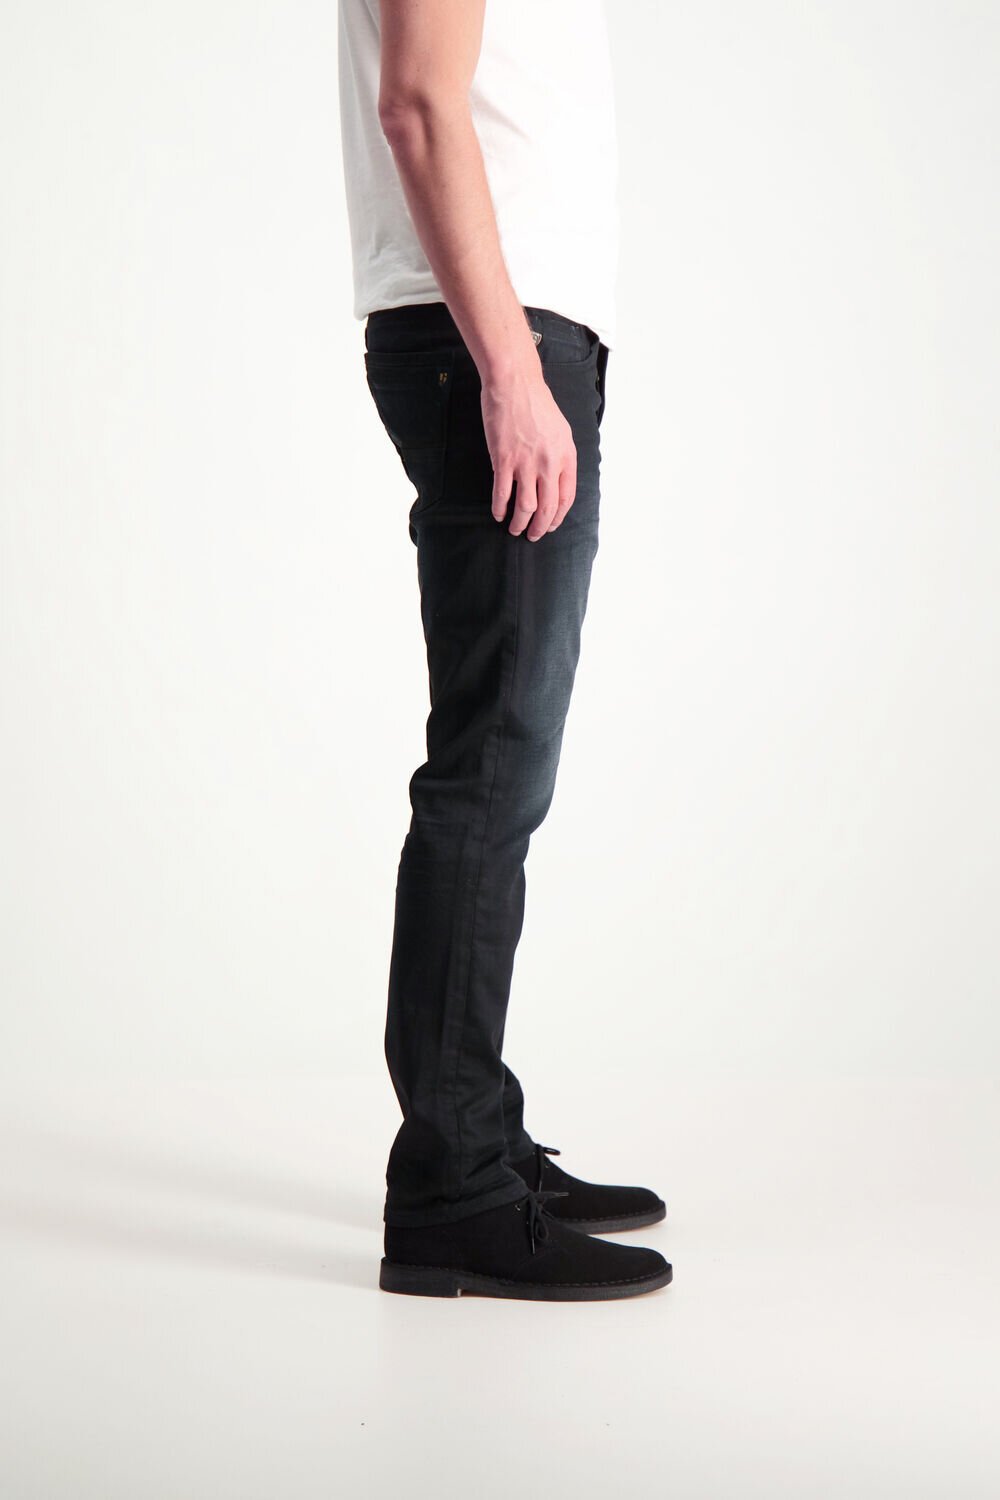 Blue Black 630 Nelson Savio Tailors Garcia — Jeans Menswear